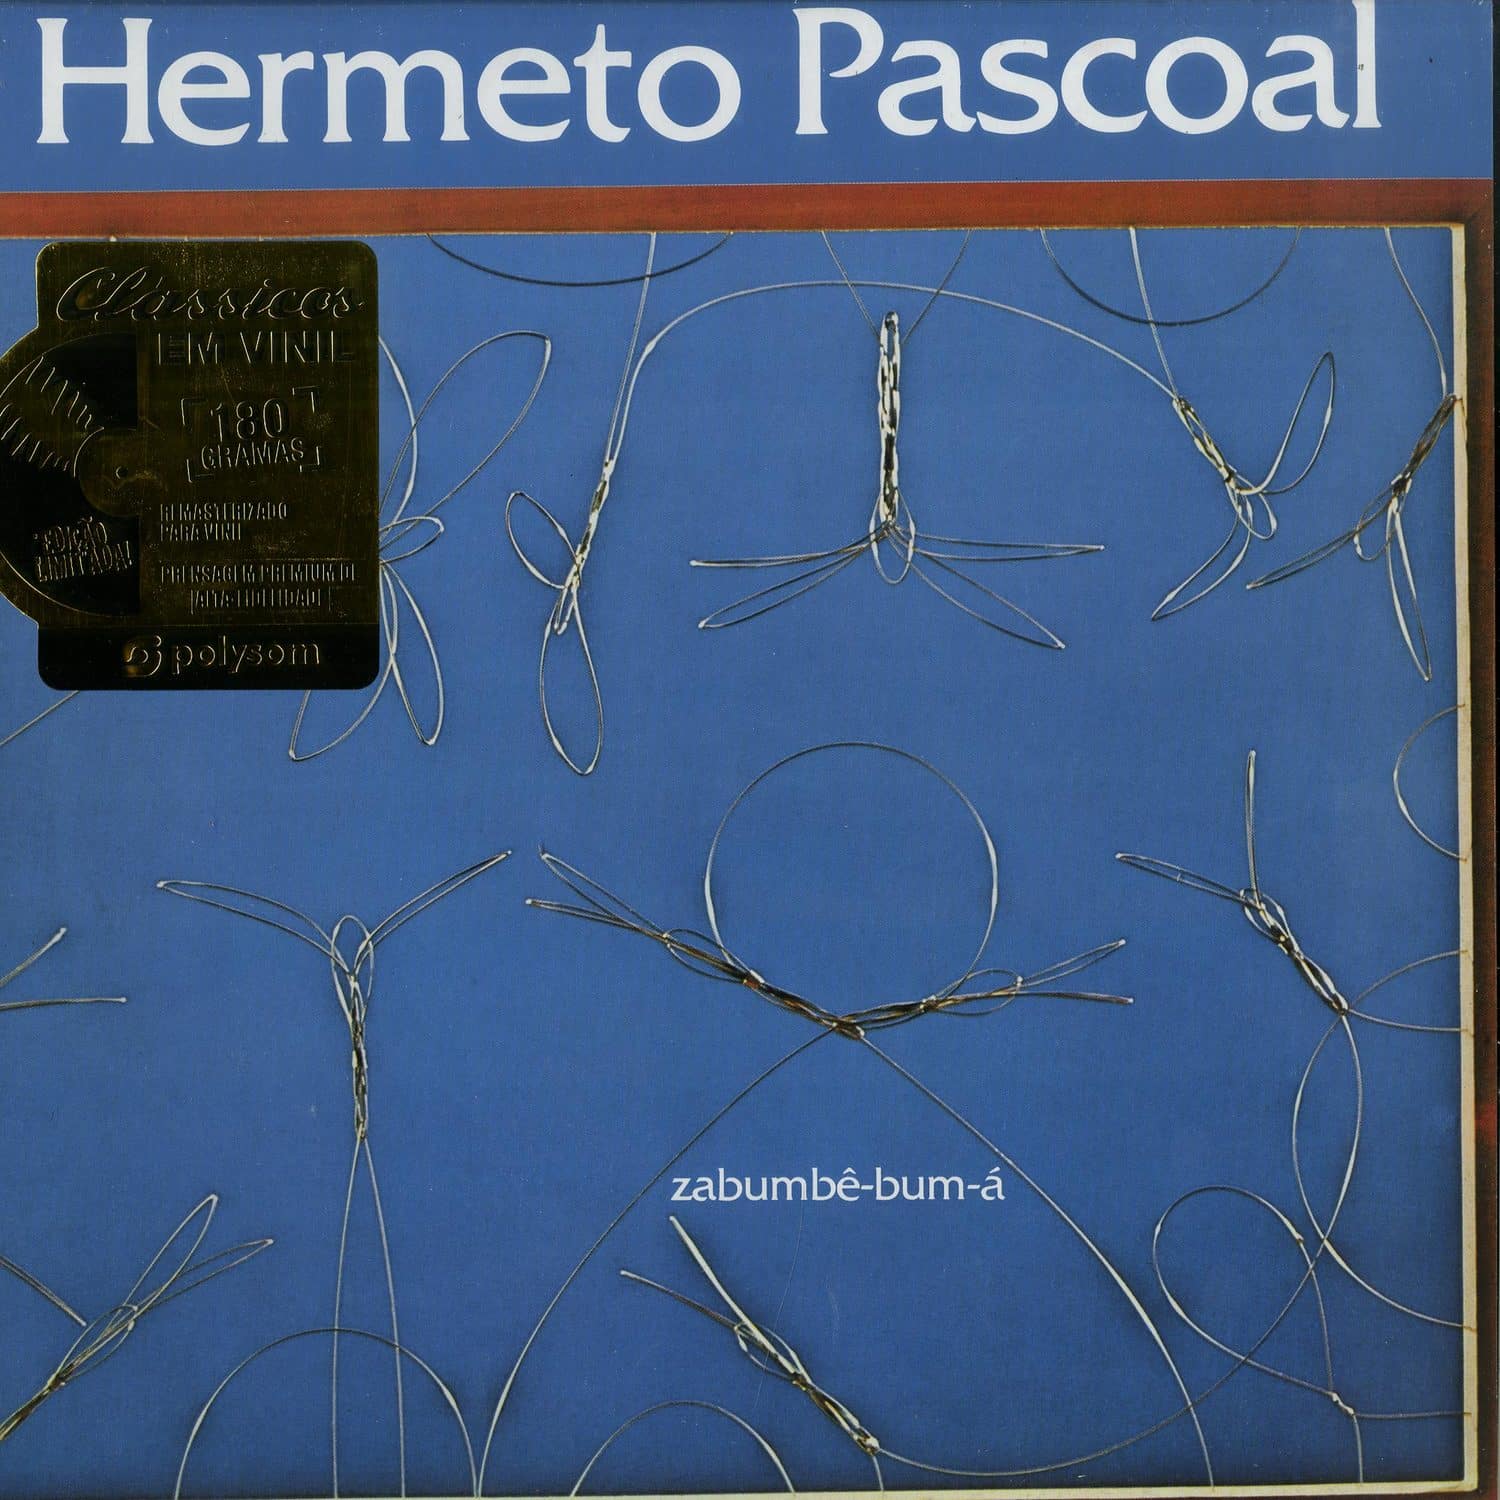 Hermeto Pascoal - ZABUMBE-BUM-A 